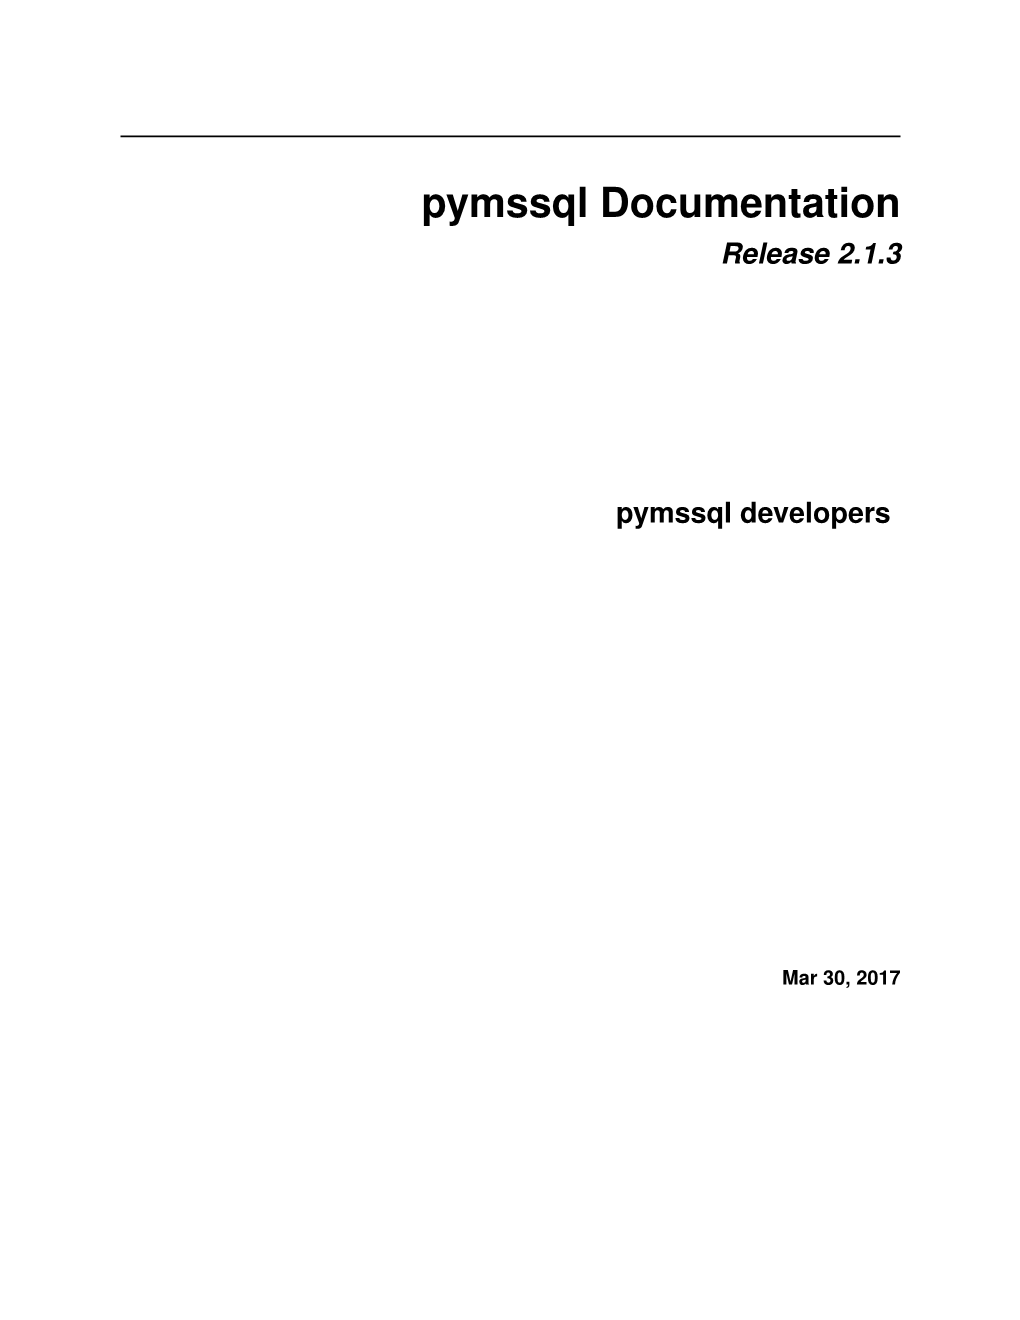 Pymssql Documentation Release 2.1.3